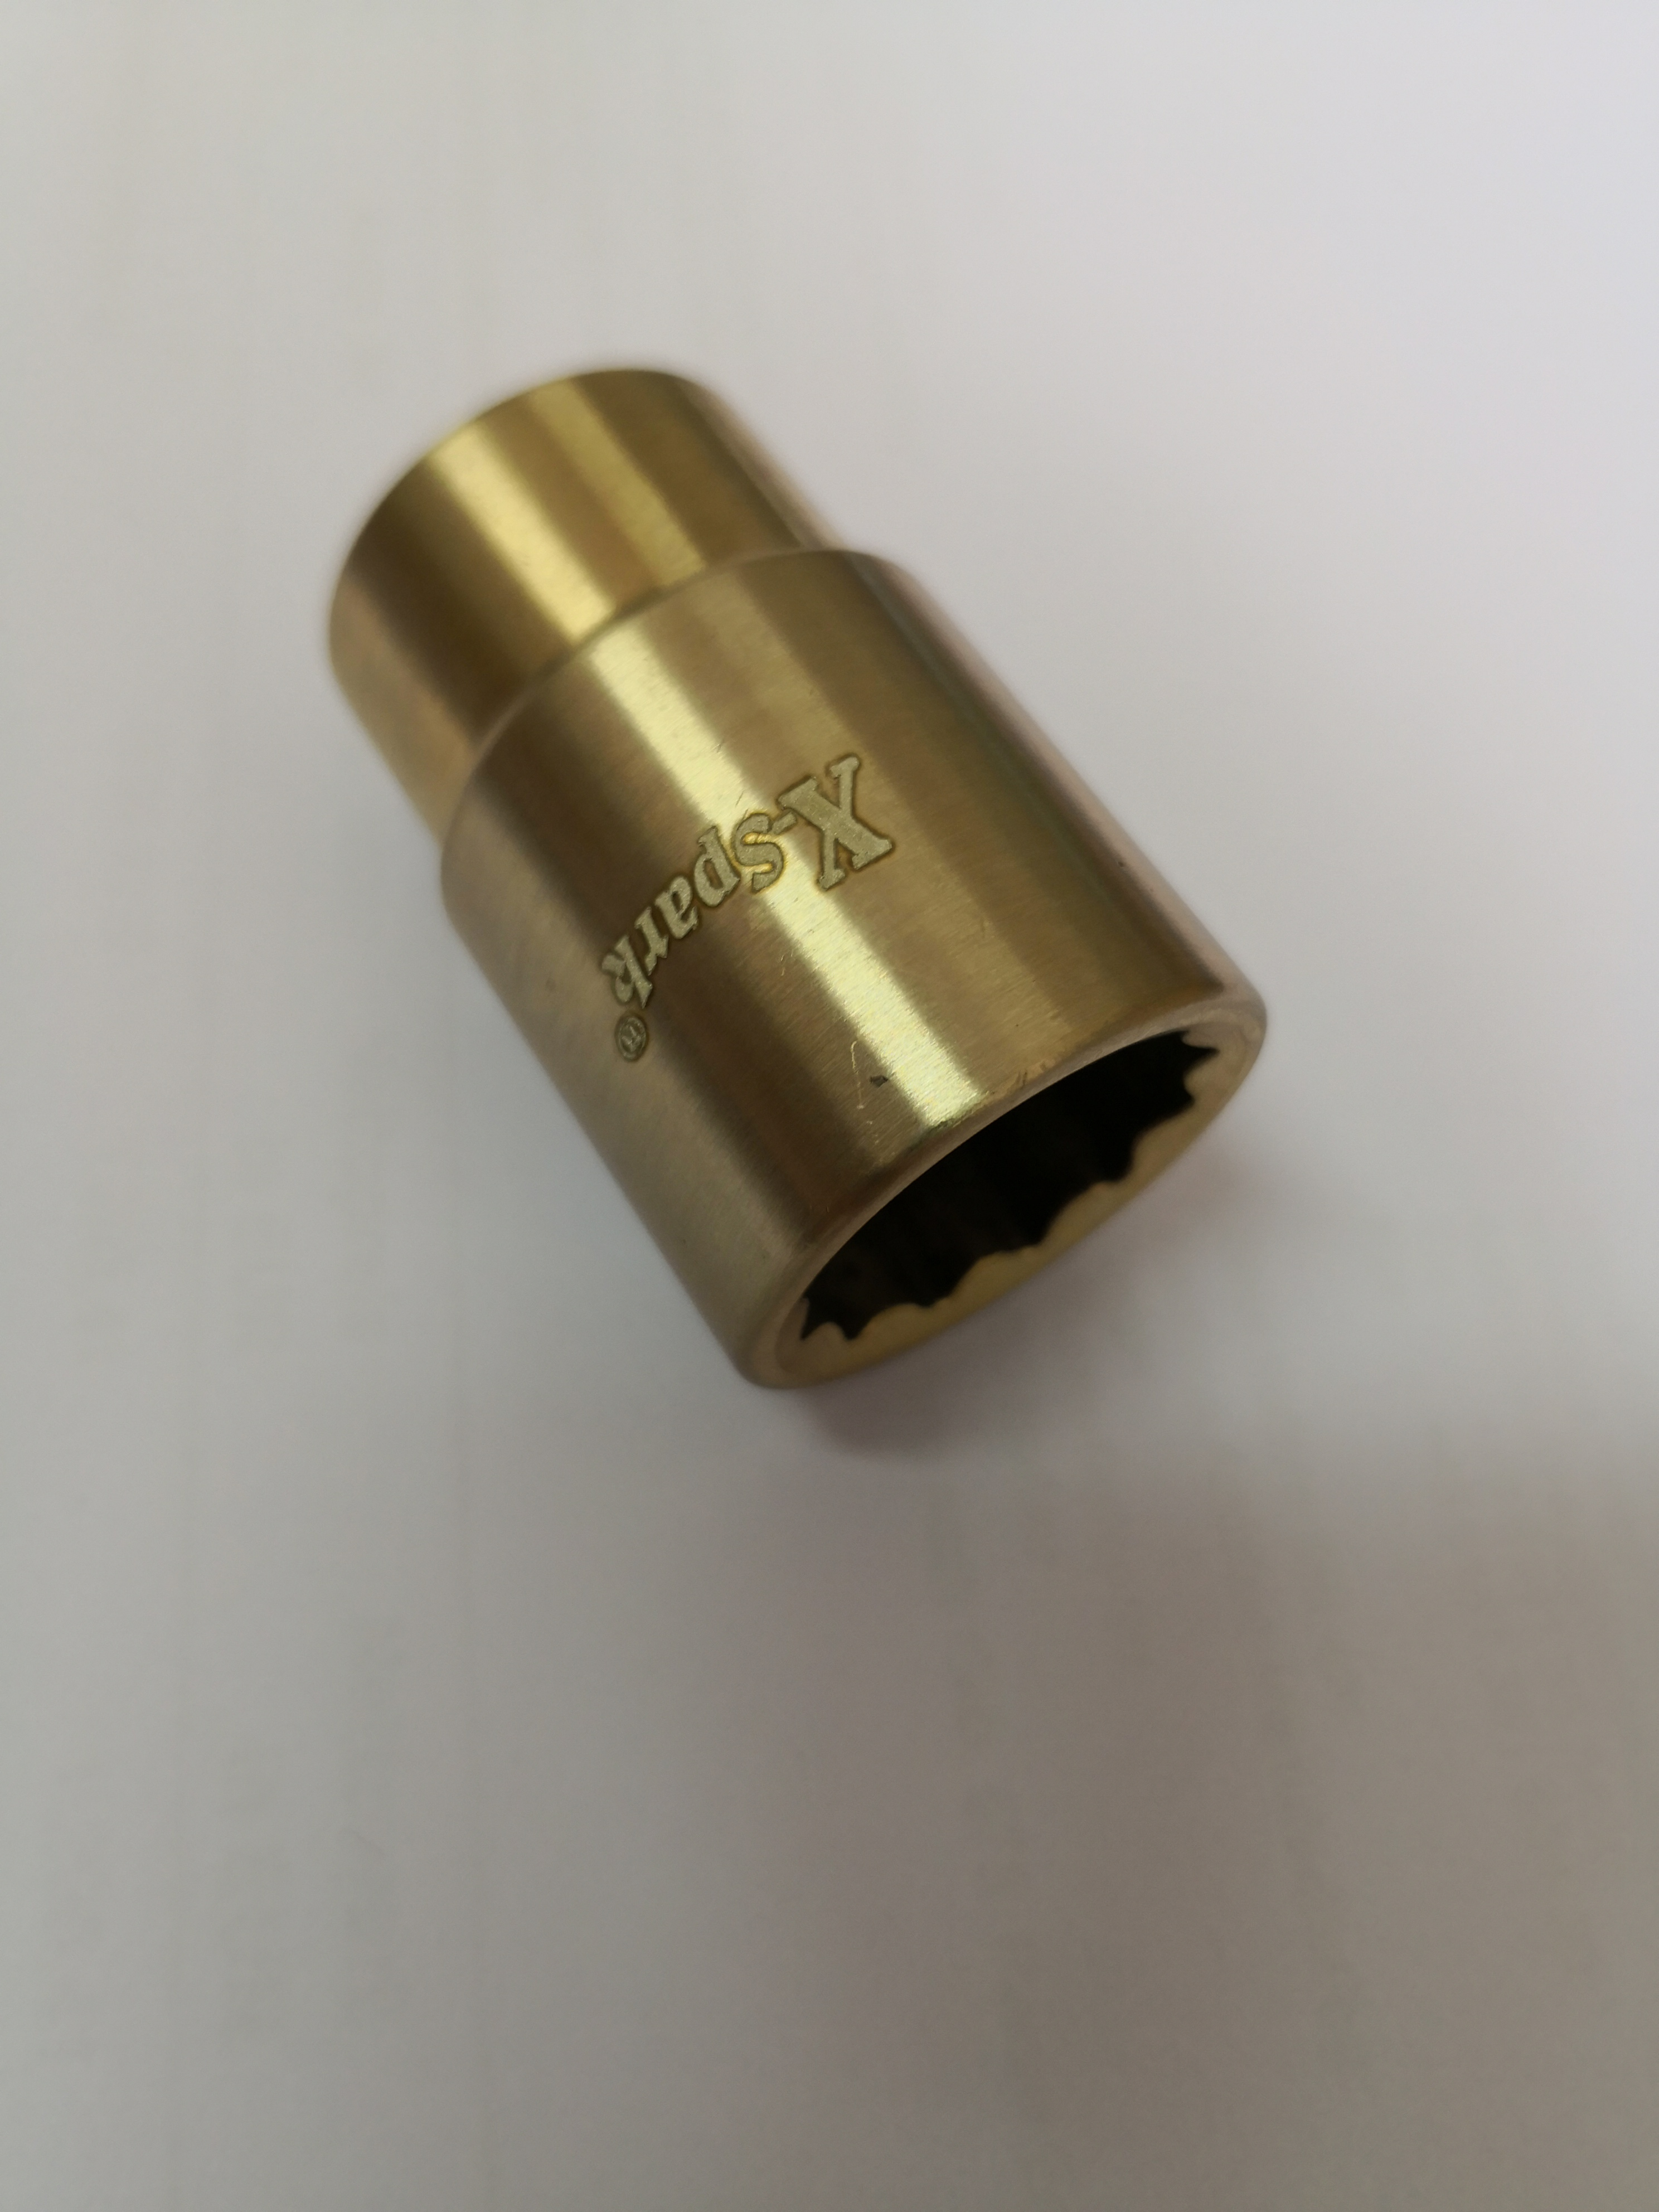 Socket 1/4 10 mm- non-sparking / low-sparking